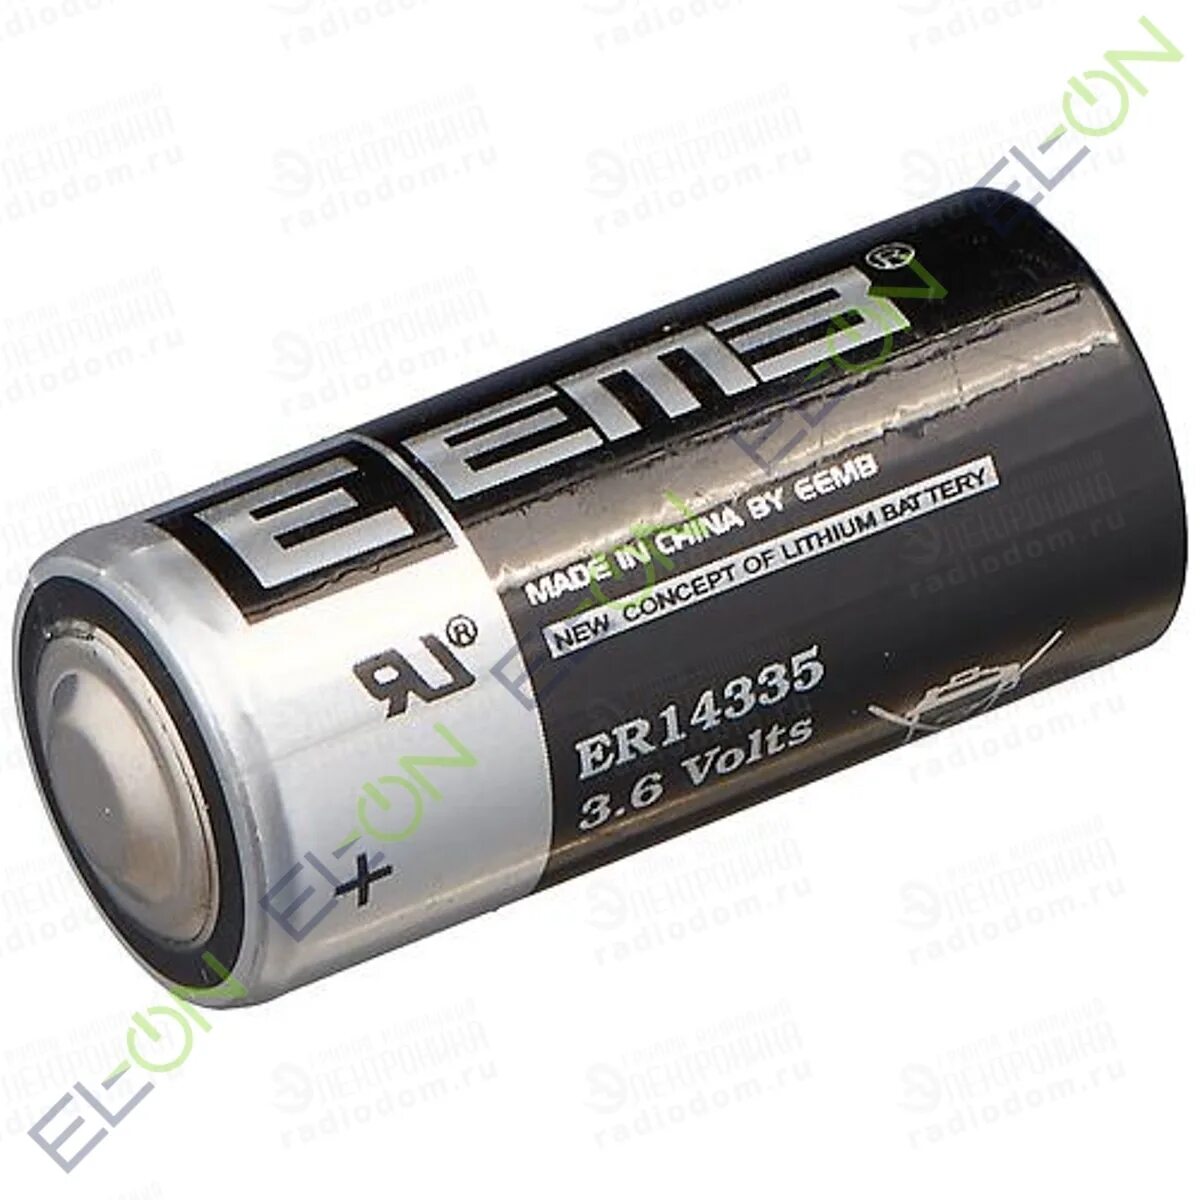 Купить батарейку 3.6. Батарейка er14335. Литиевая батарейка 3.6v Eve er14335 (2/3aa). Er14335 EEMB. Батарейка er14335 (2/3aa), 3.6в, 1650маh.